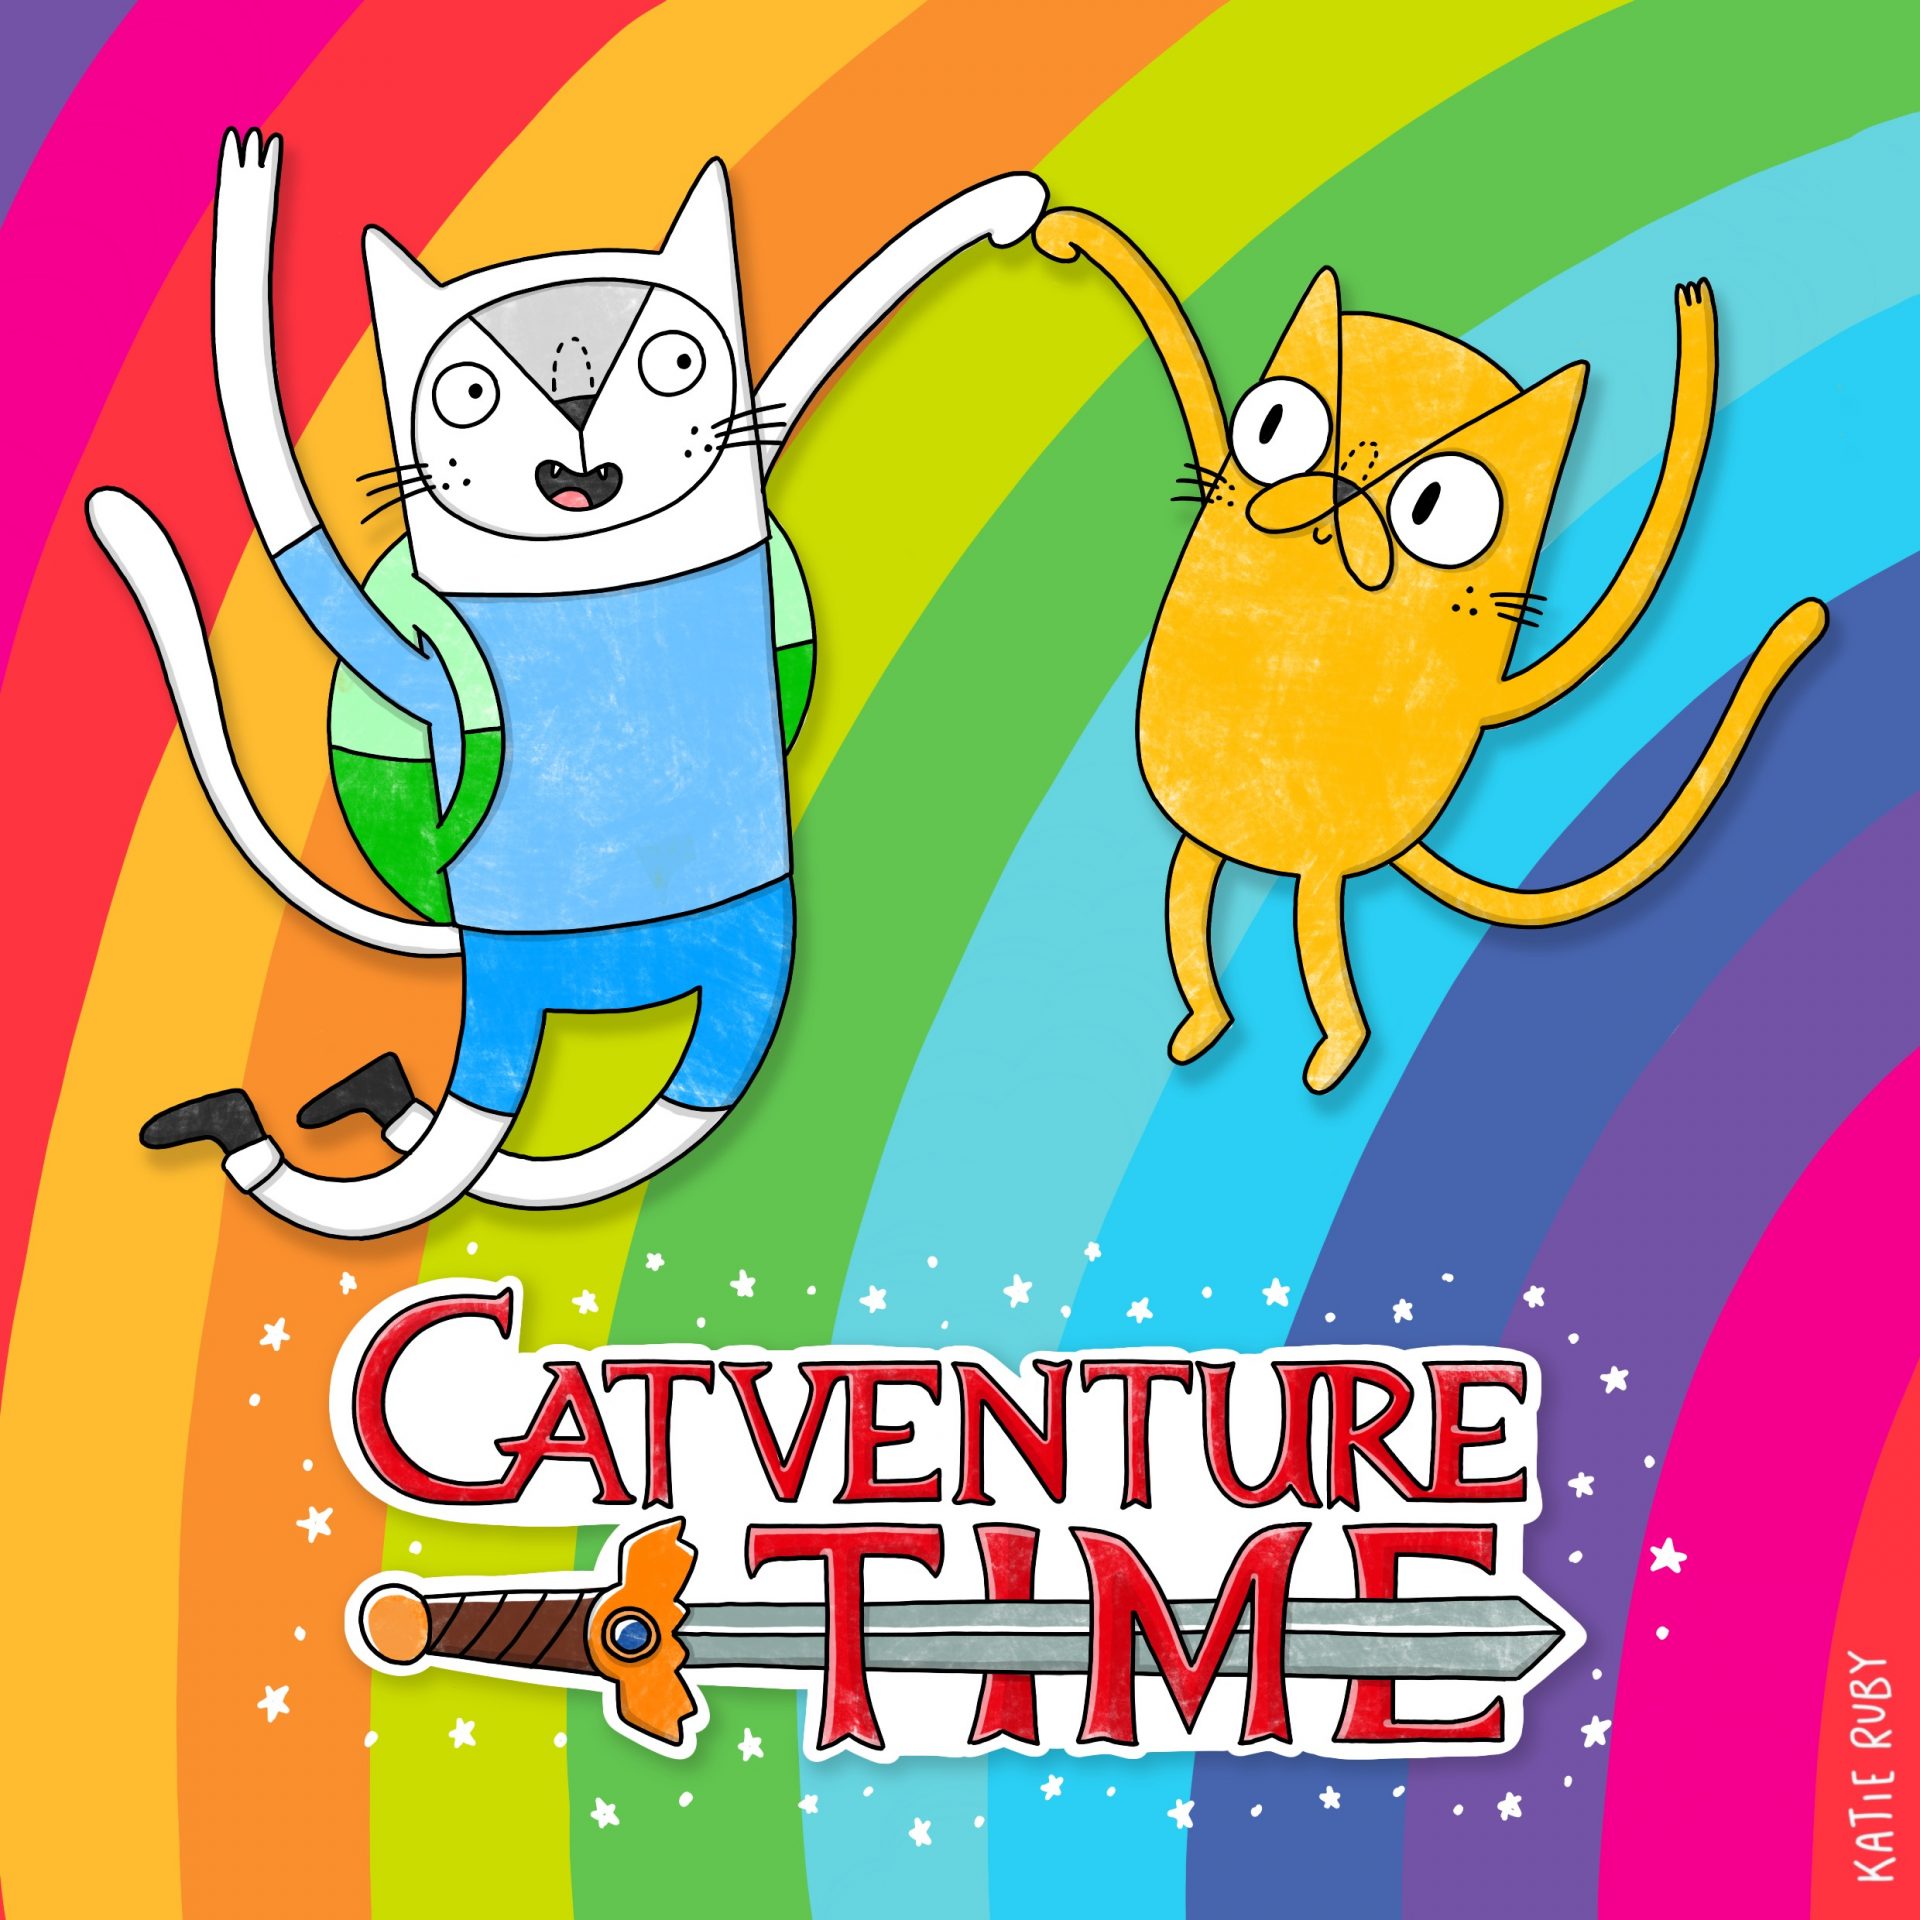 catventure time adventure time cat pun